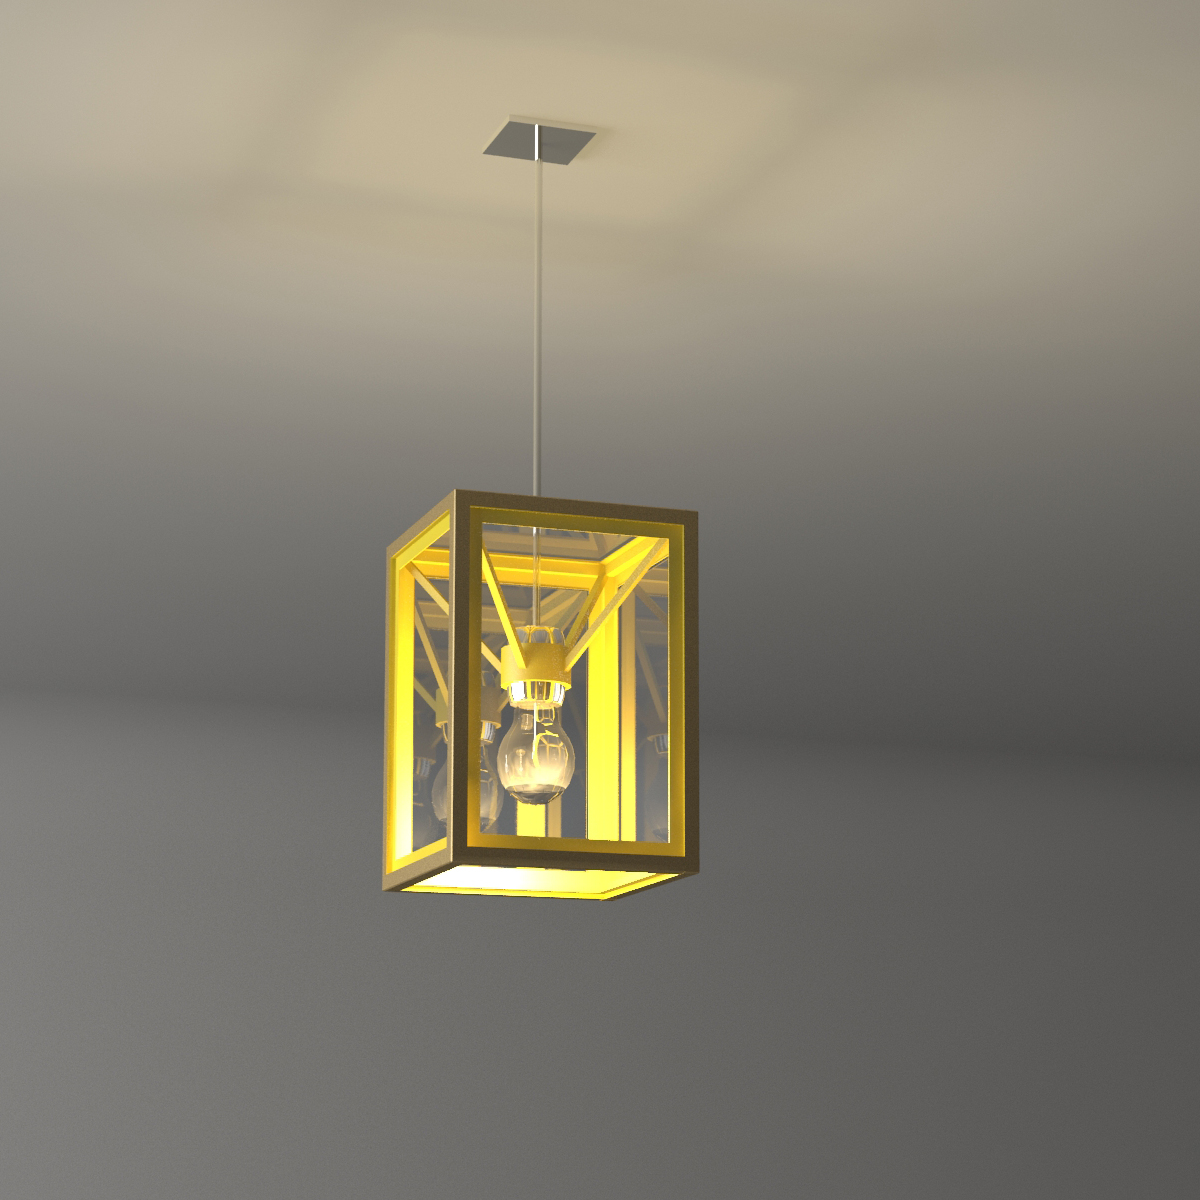 End Ceiling Light Fixture 3d Max